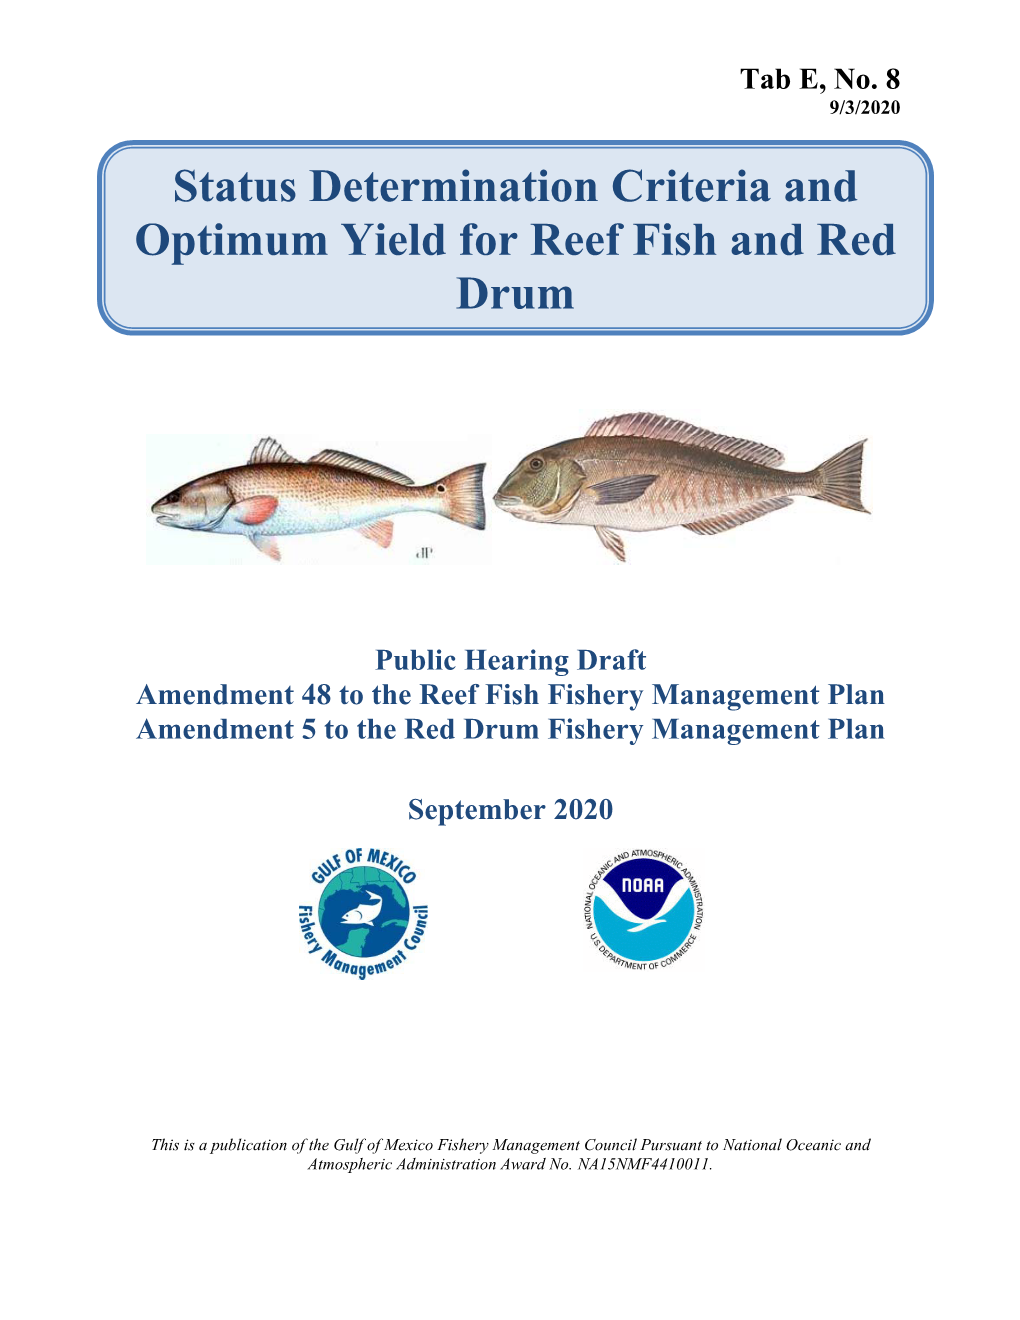 Public Hearing Draft Amendment Reef Fish 48/Red Drum 5